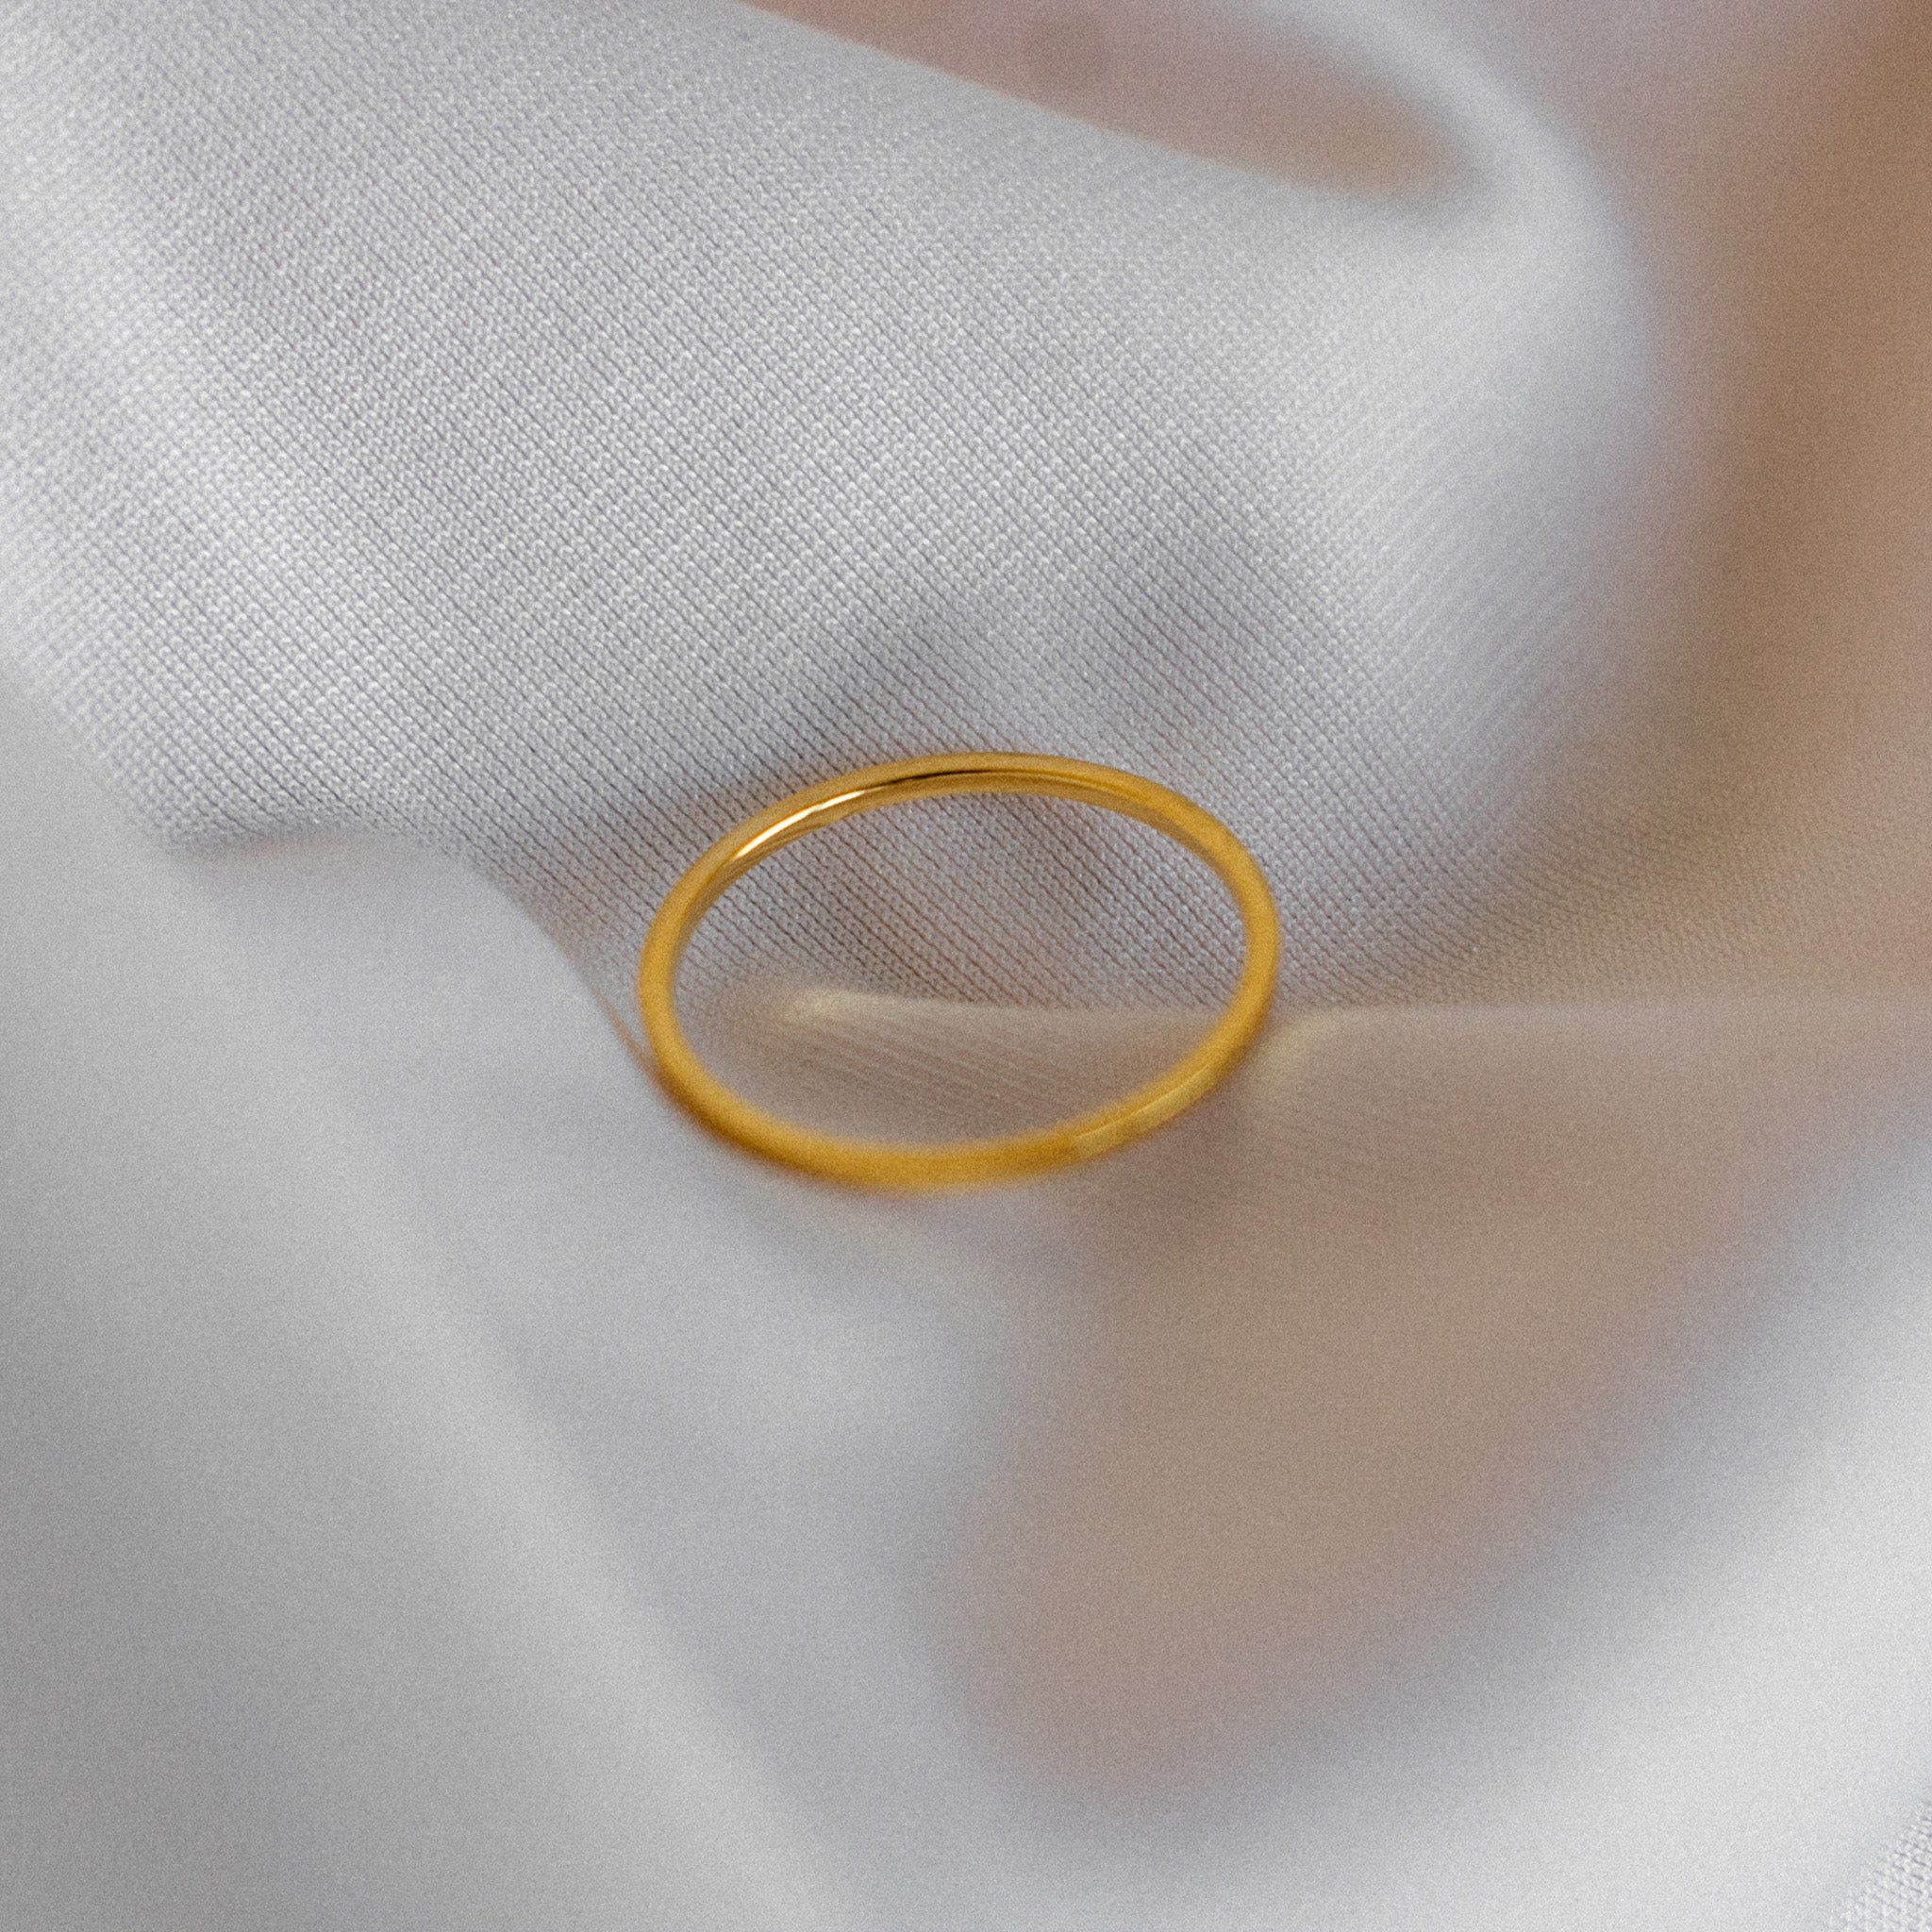 Thin gold stacking ring